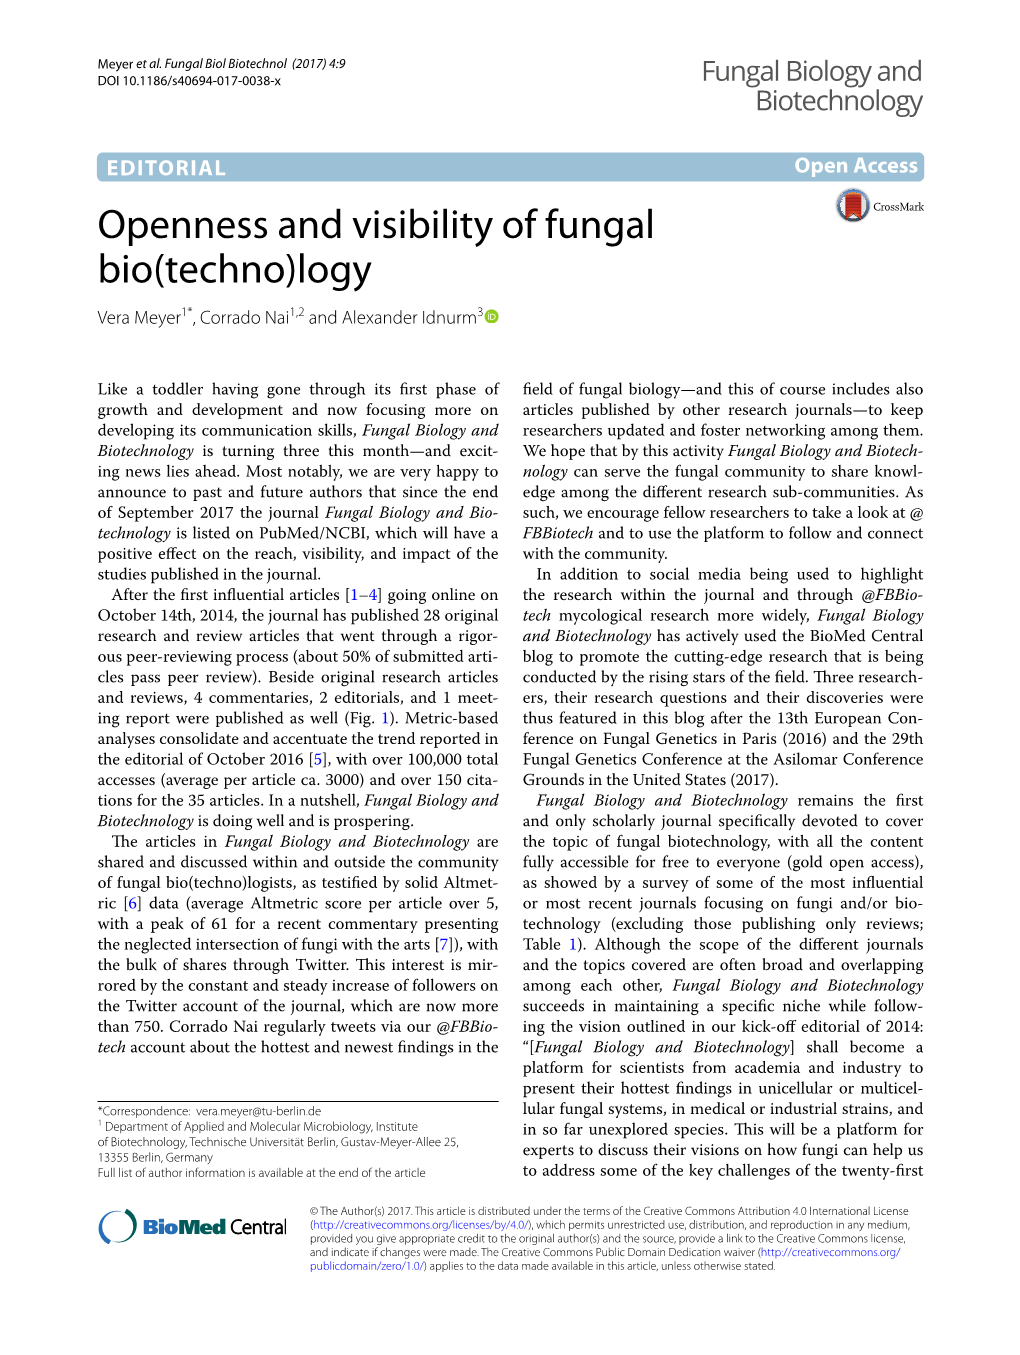 Openness and Visibility of Fungal Bio(Techno)Logy Vera Meyer1*, Corrado Nai1,2 and Alexander Idnurm3